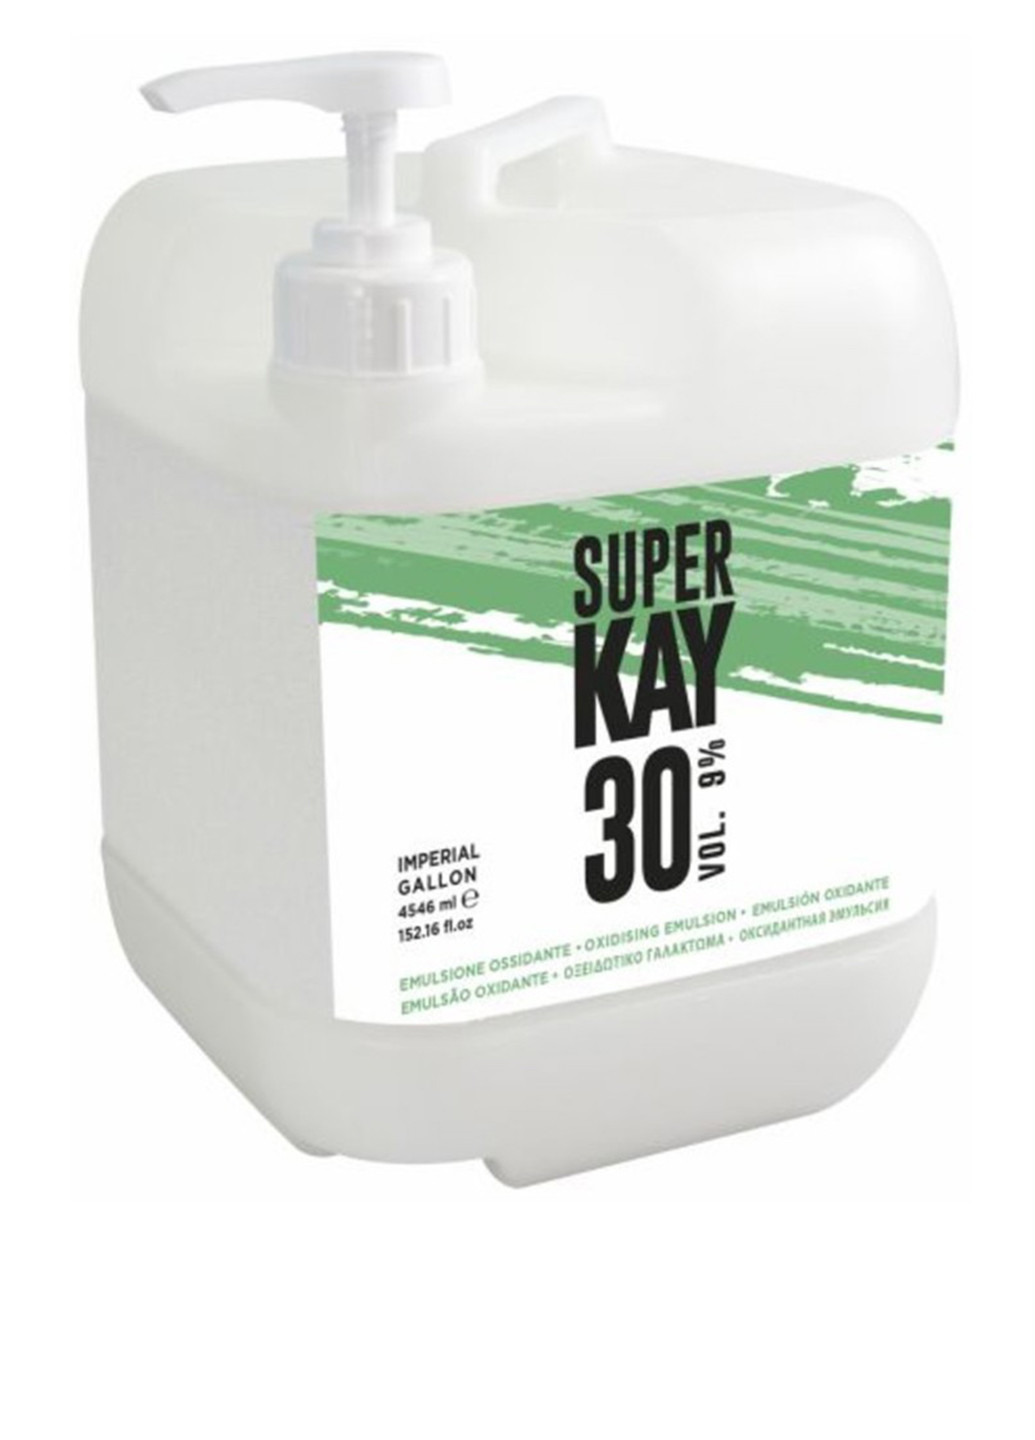 Окислитель для краски Super Kay 9%, 4546 мл KayPro (75295228)